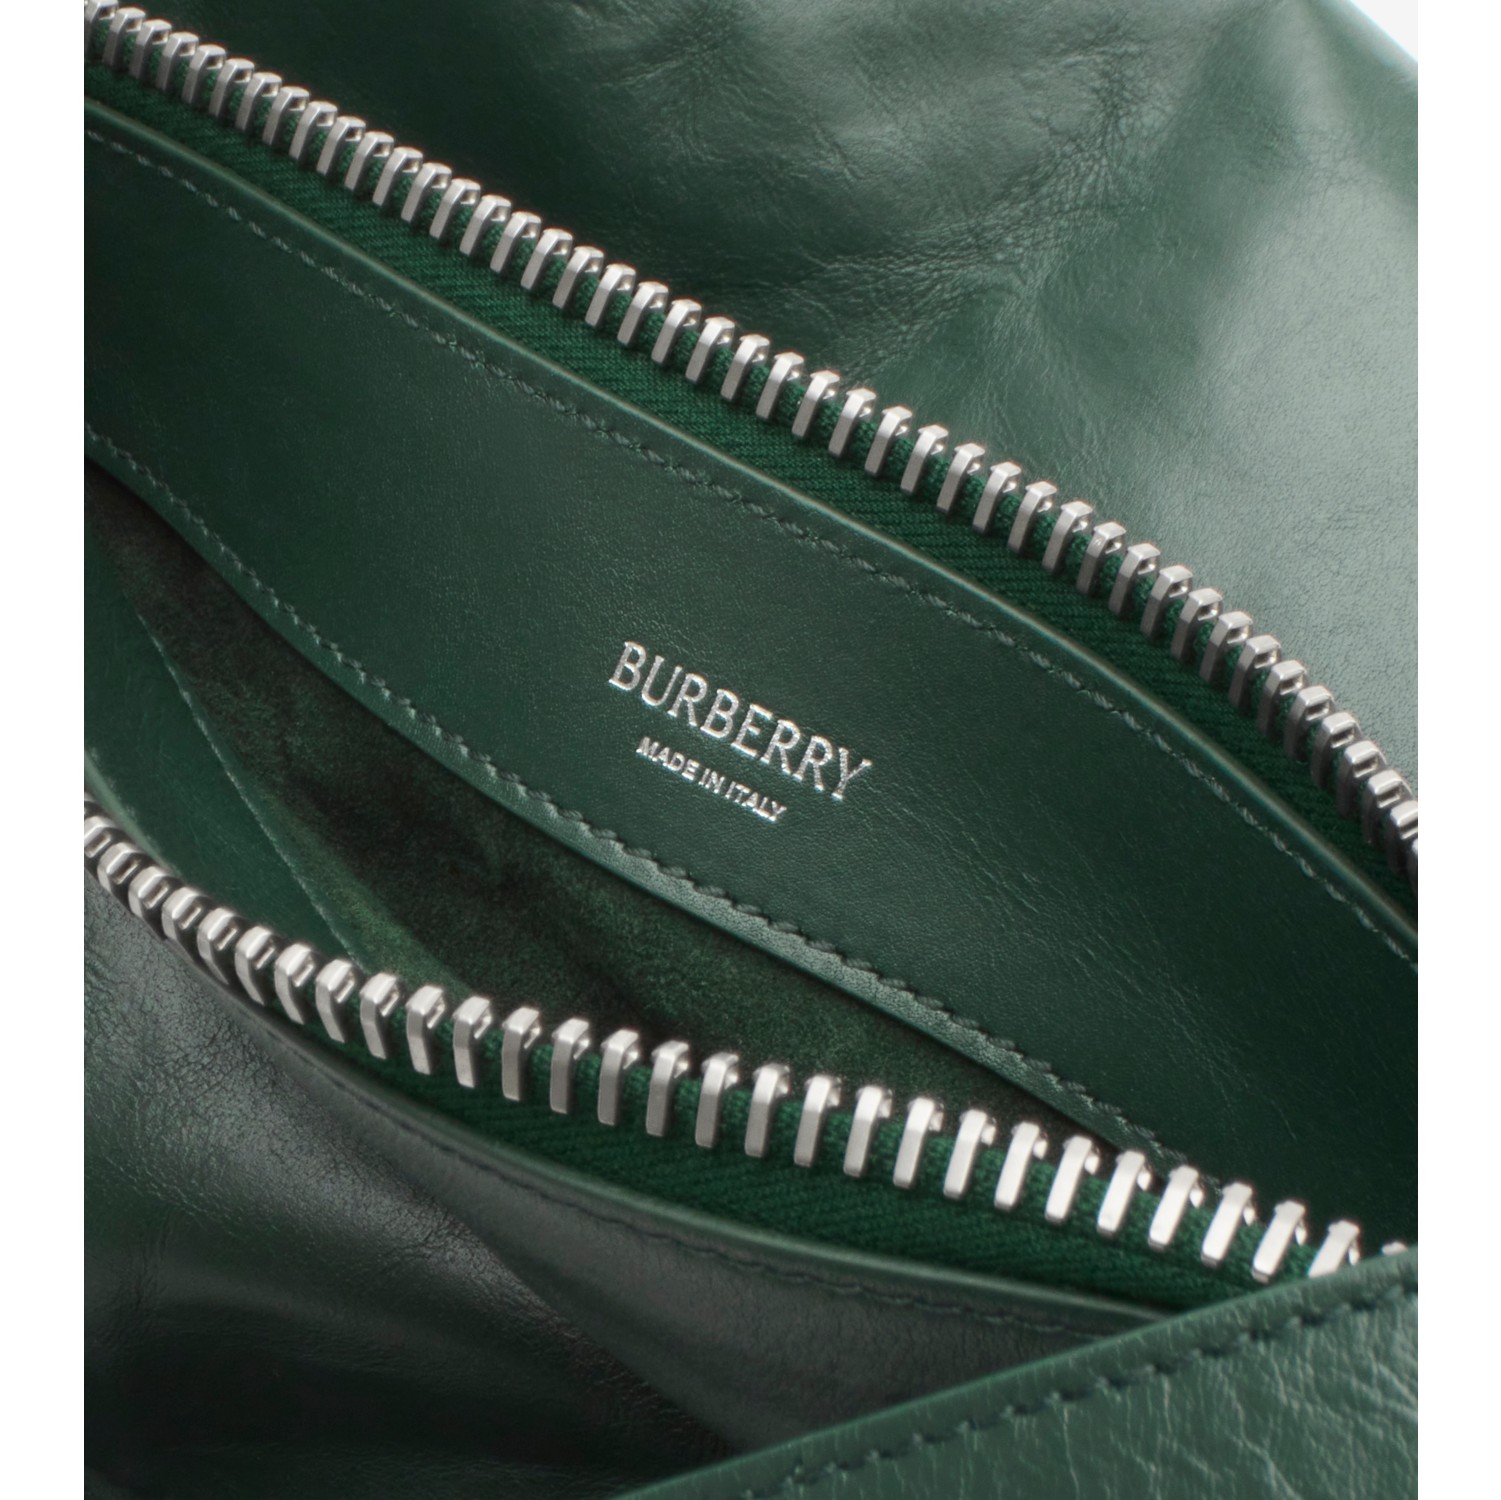 Medium Knight Bag in Vine - Women | Burberry® Official